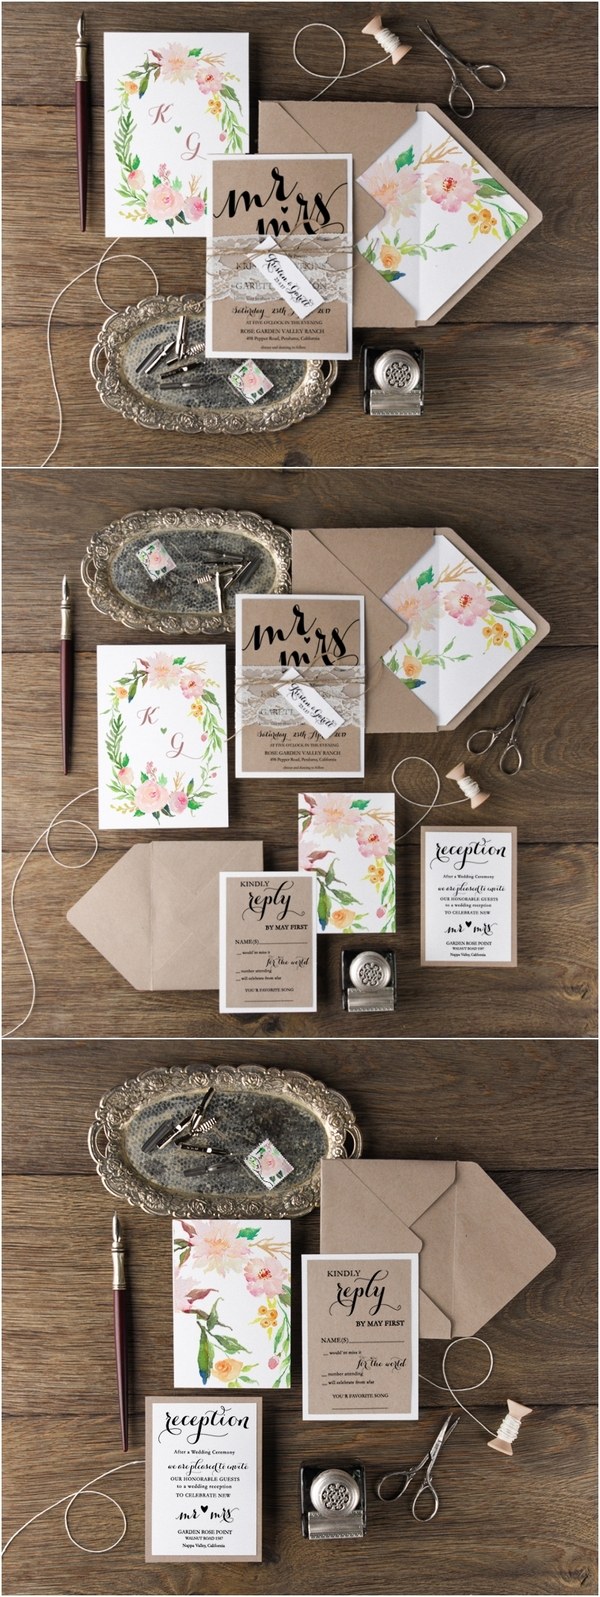 Rustic botanical lace wedding invitation kits with tag